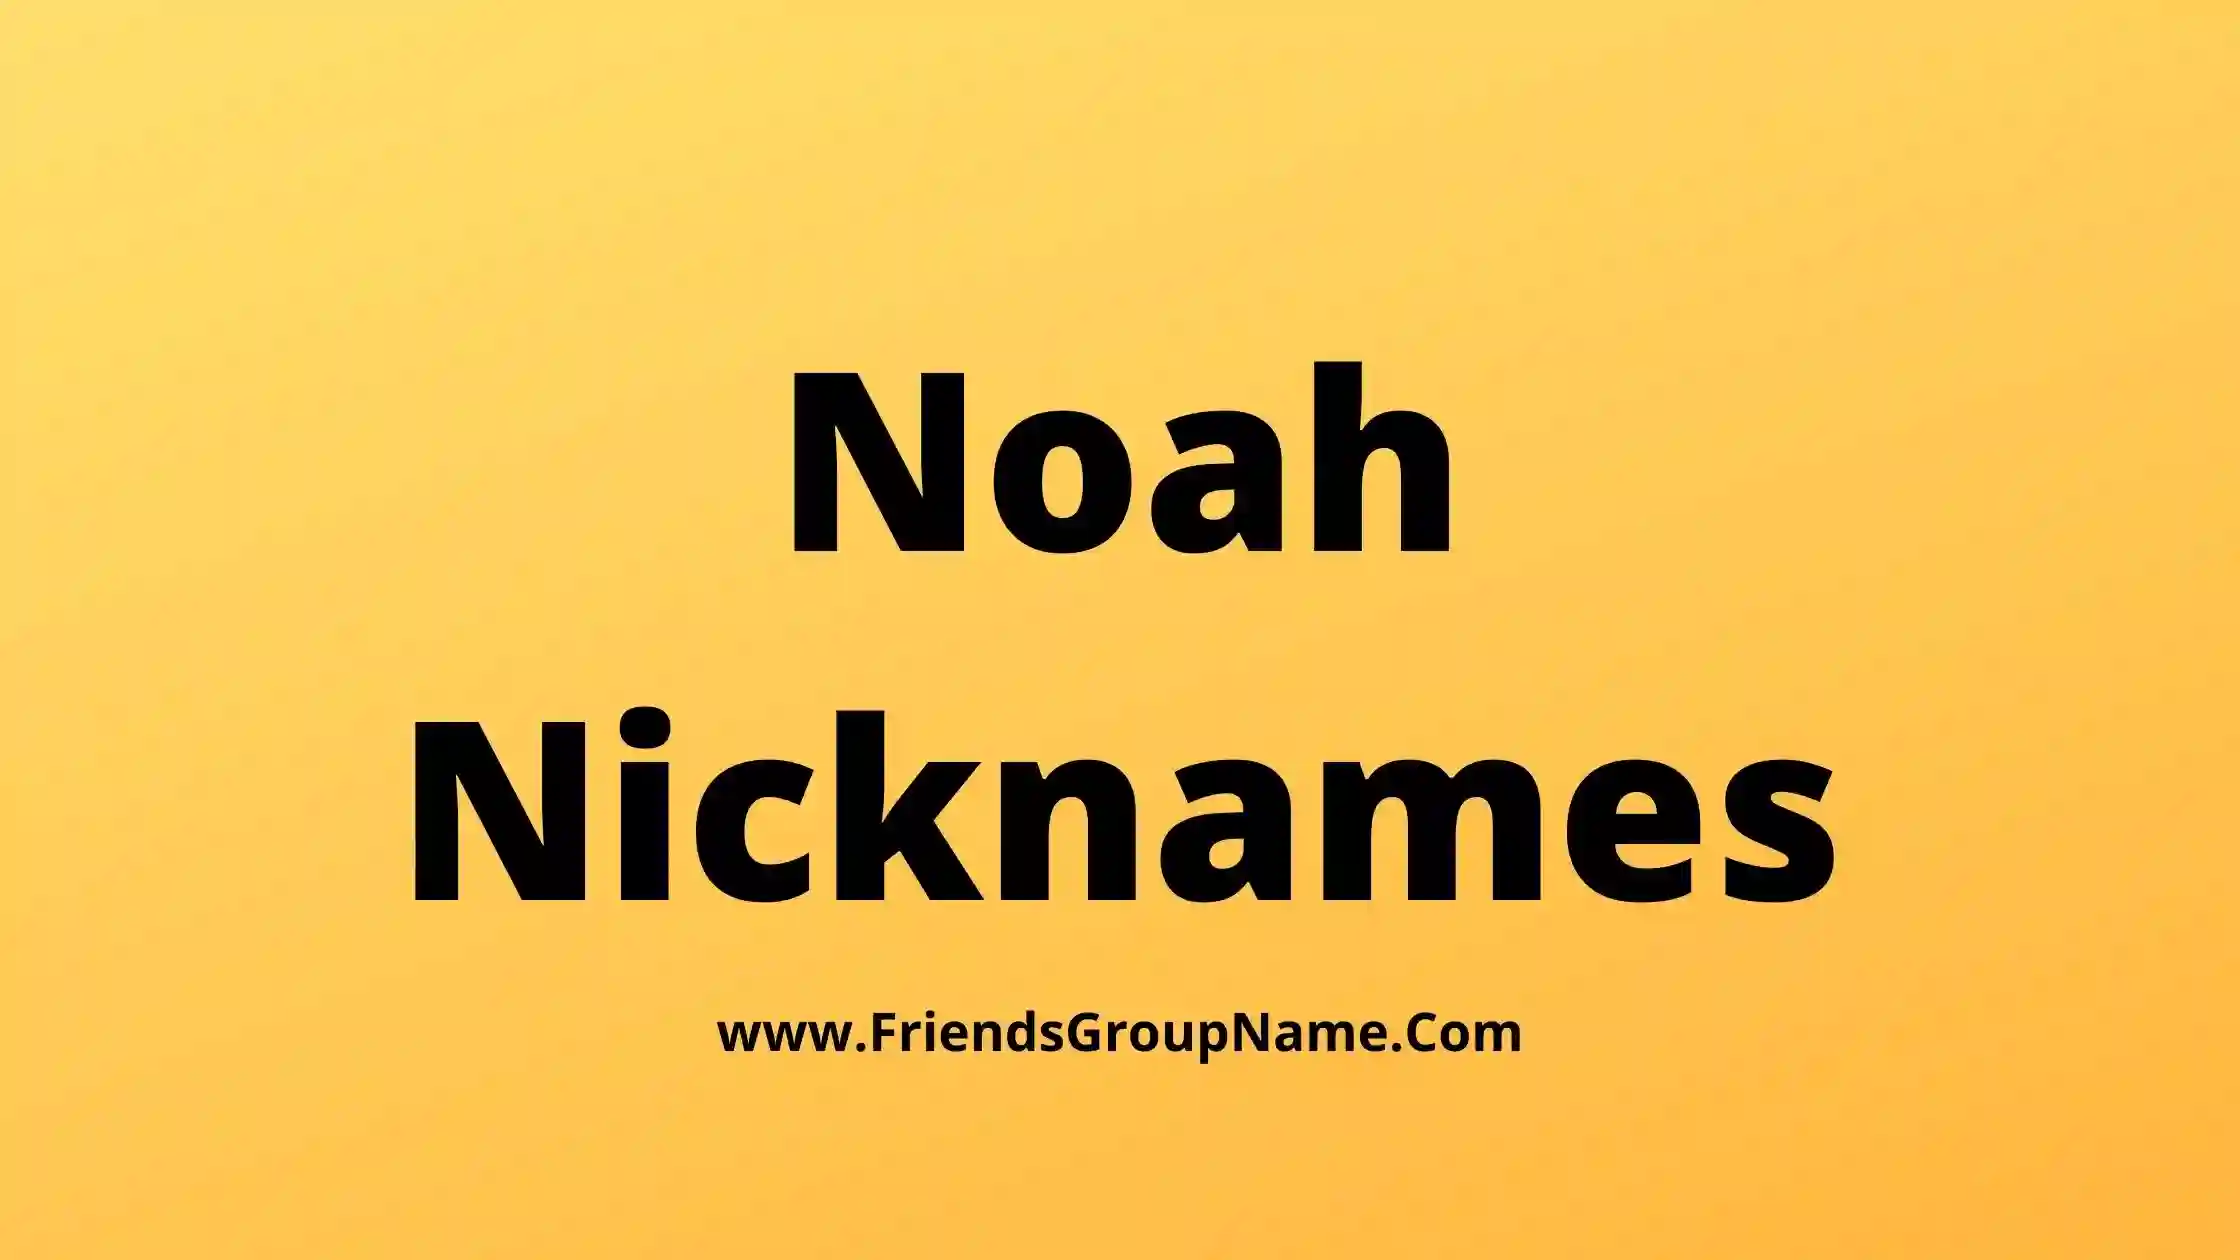 Noah Nicknames